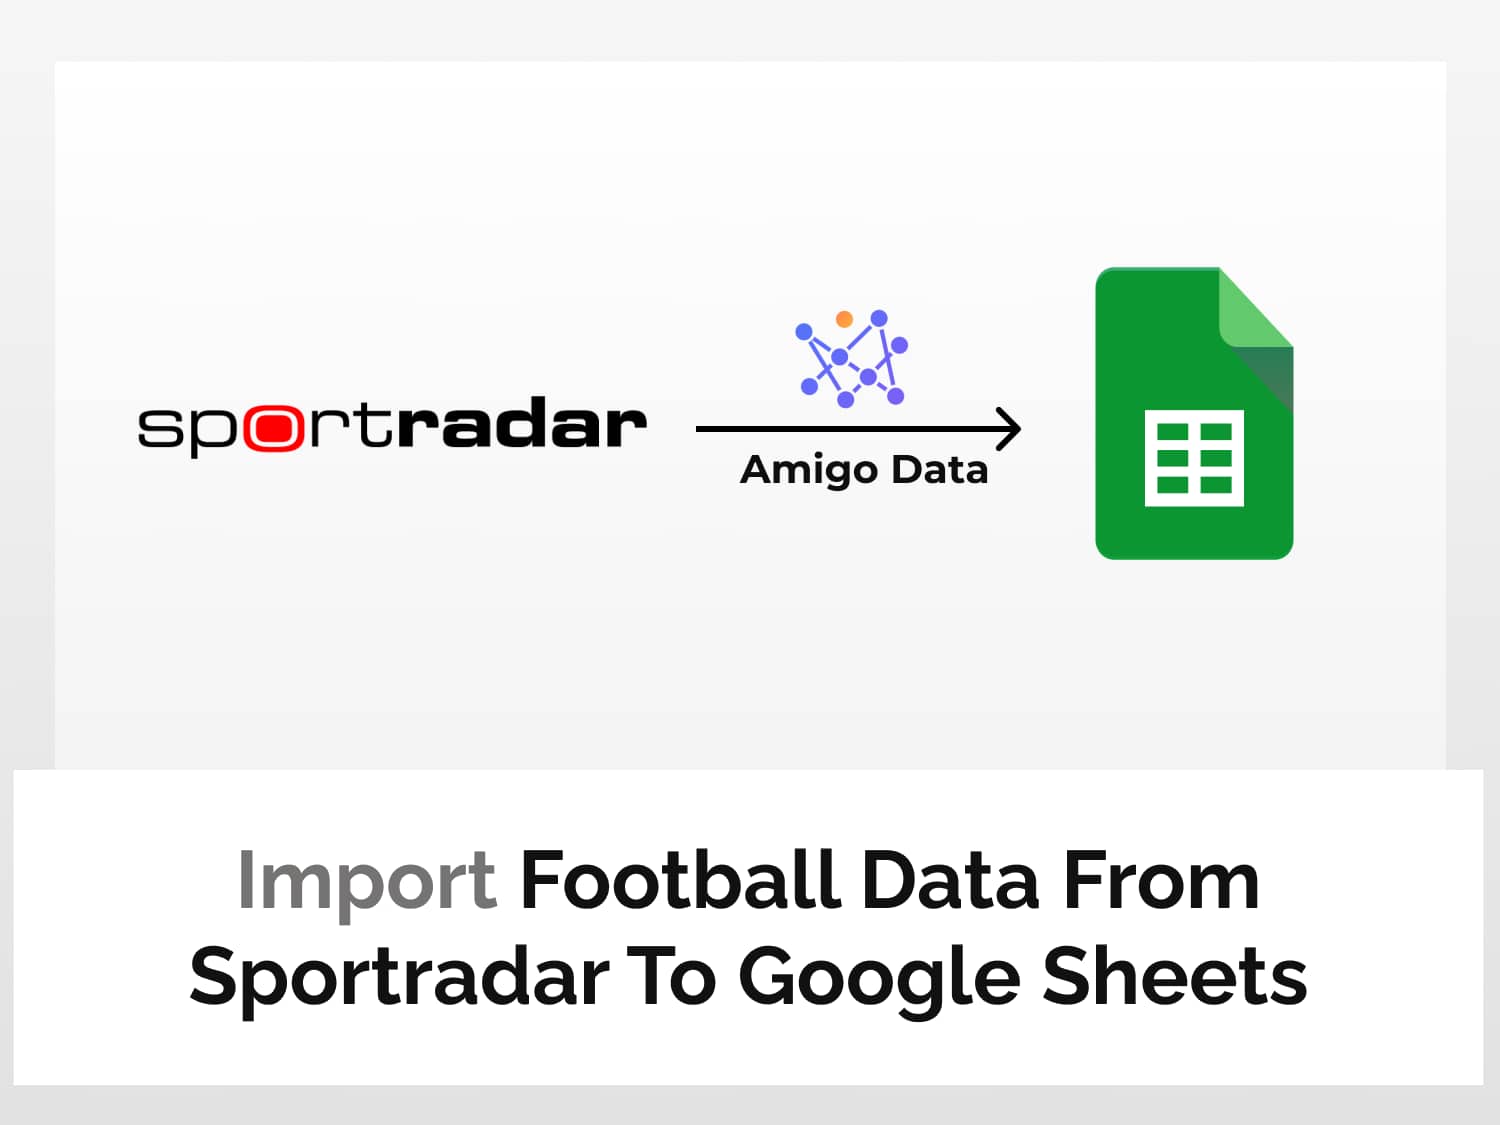 Import Football Data To Google Sheets